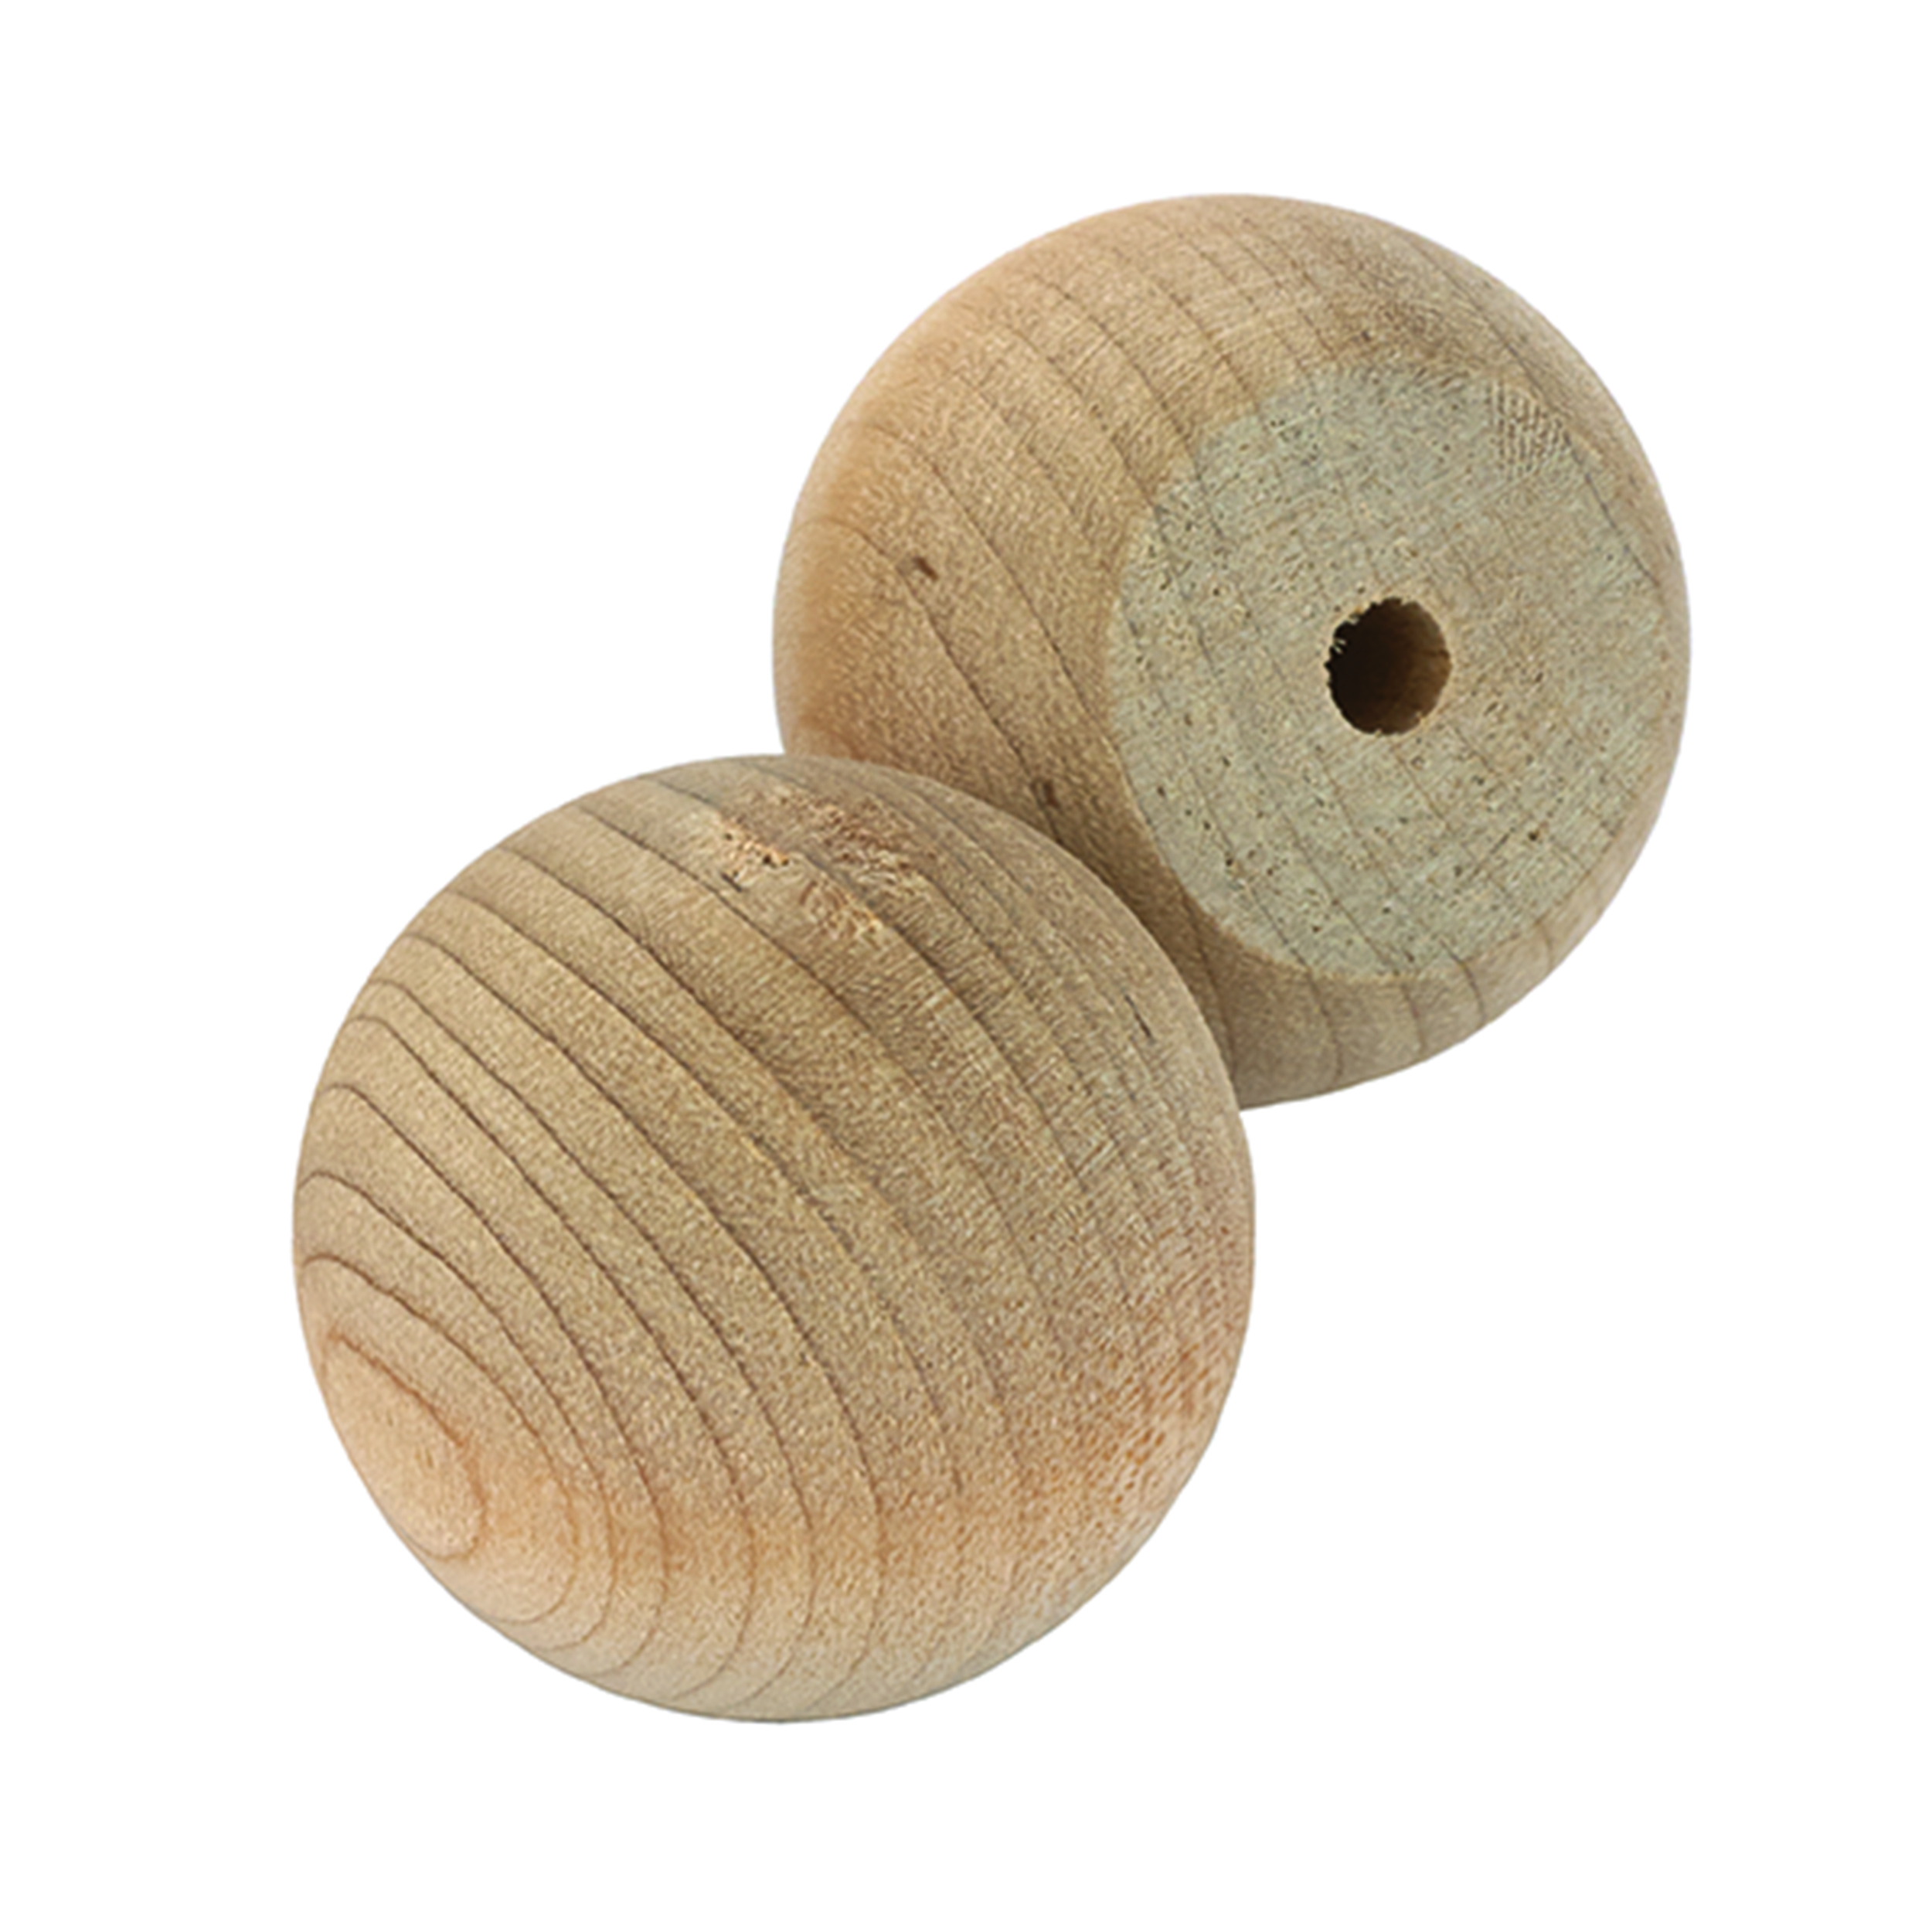 Hardwood Ball Knob, 1-1/4" Dia., Flat 3/4" W/screws 2-piece